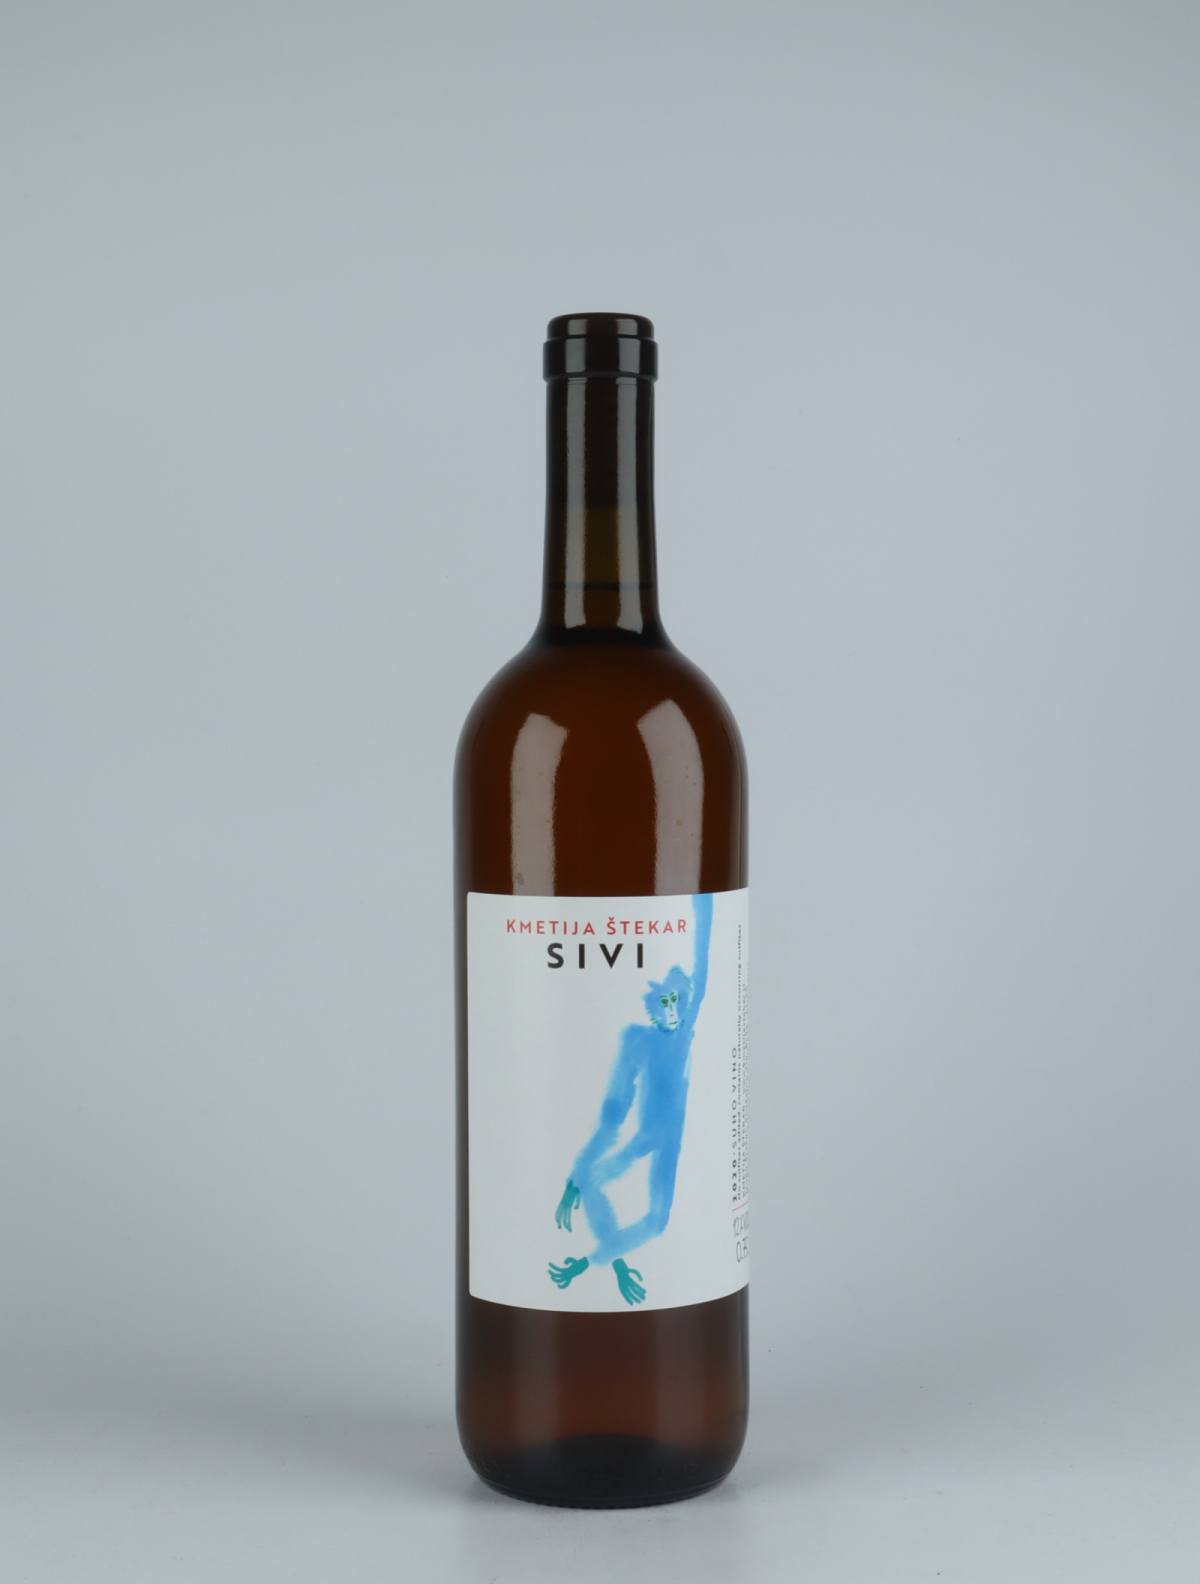 En flaske 2020 Sivi Orange vin fra Kmetija Stekar, Brda i Slovenien